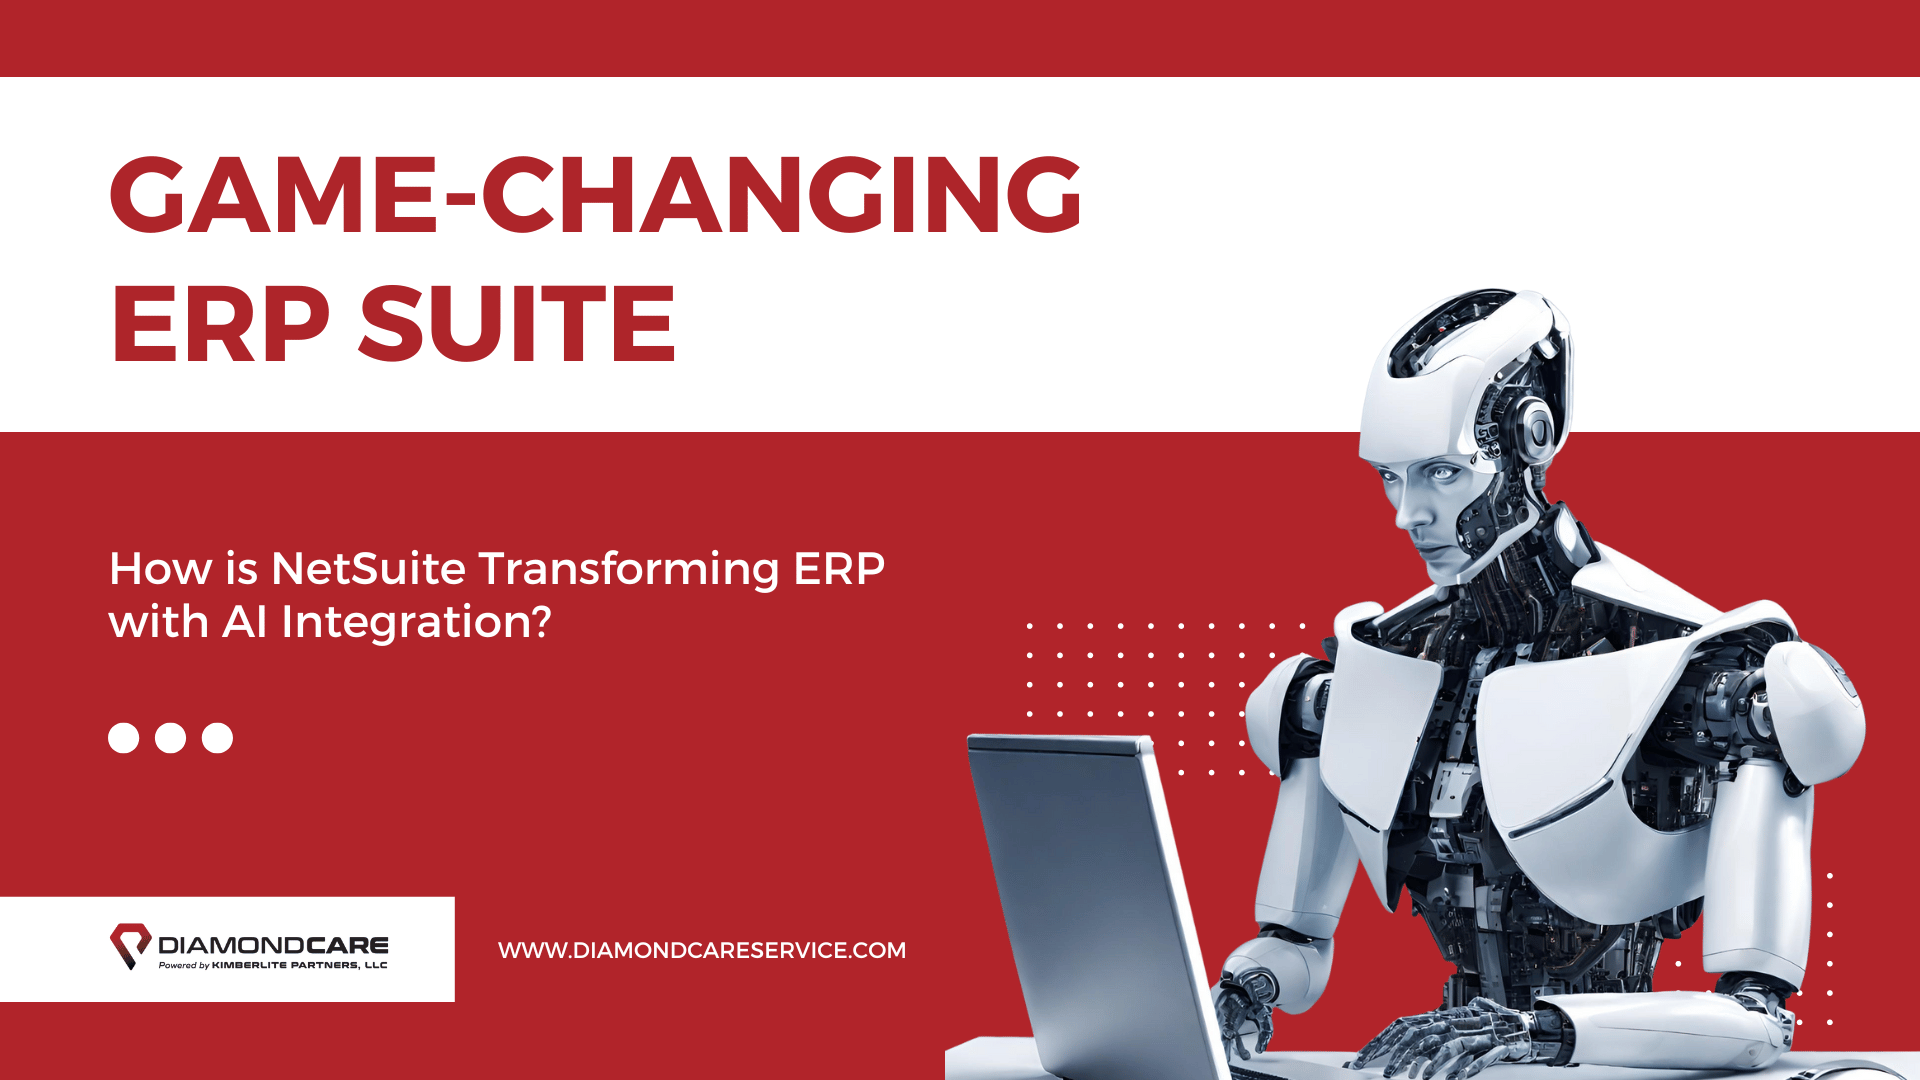 NetSuite Revolutionizes ERP Suite with AI Integration